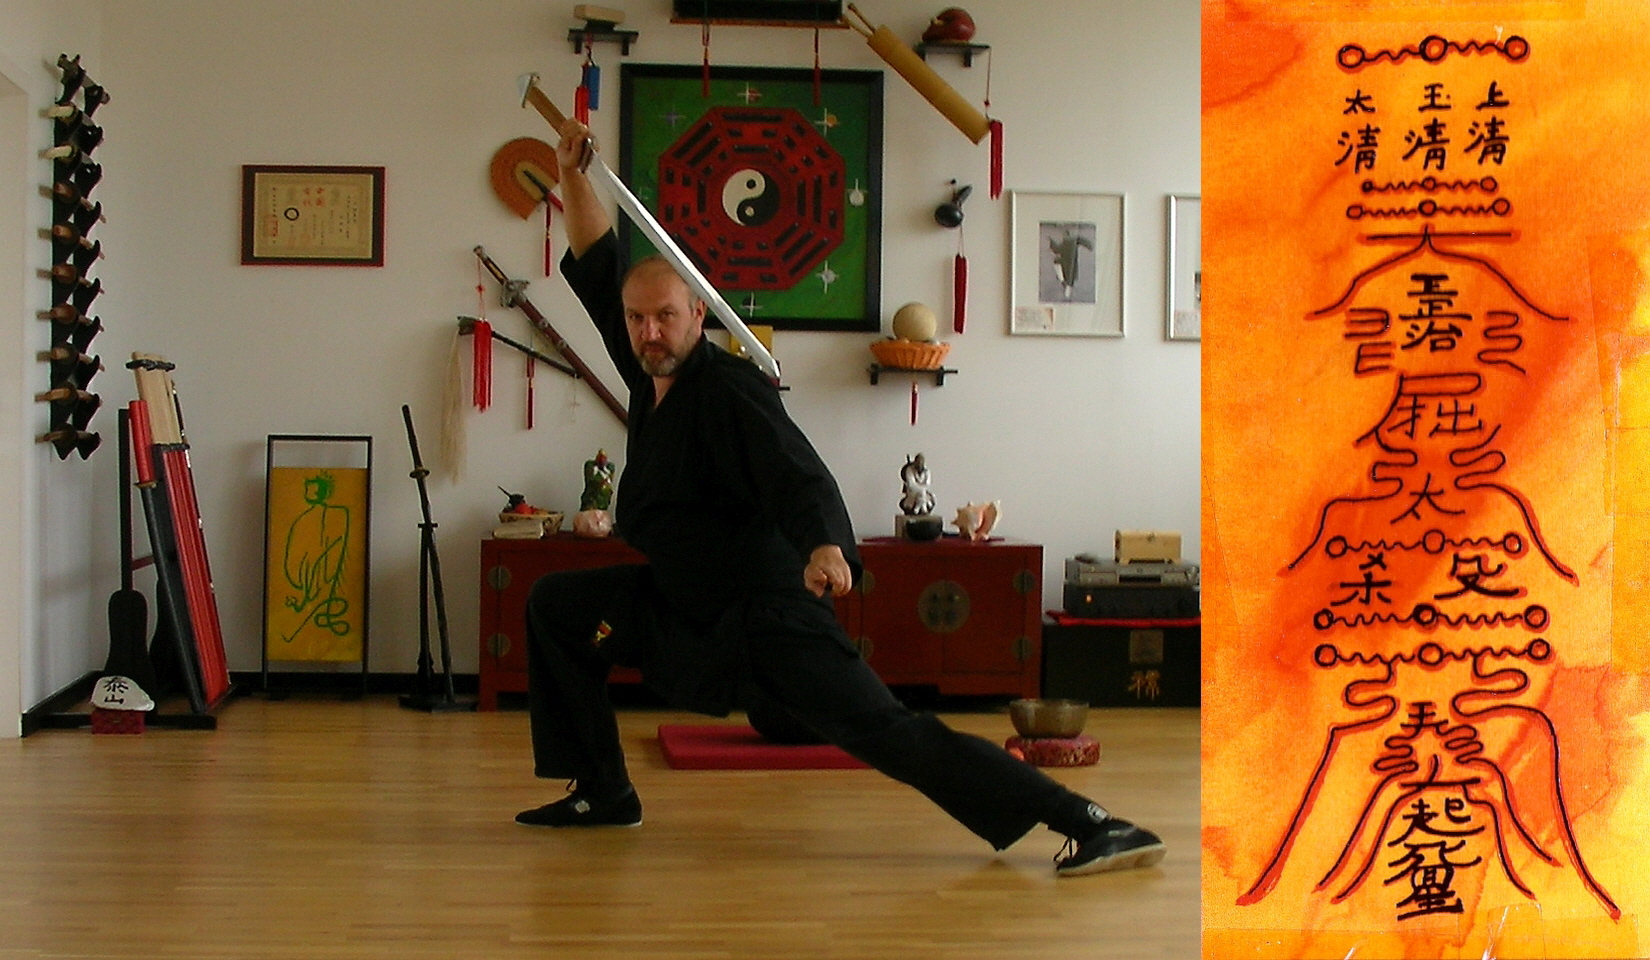 Bernd_Meditation und Schwertkampfkunst, Shen-Tao-Chi im Dojo des Tao-Chi (0092) - 1650x960-PLUS